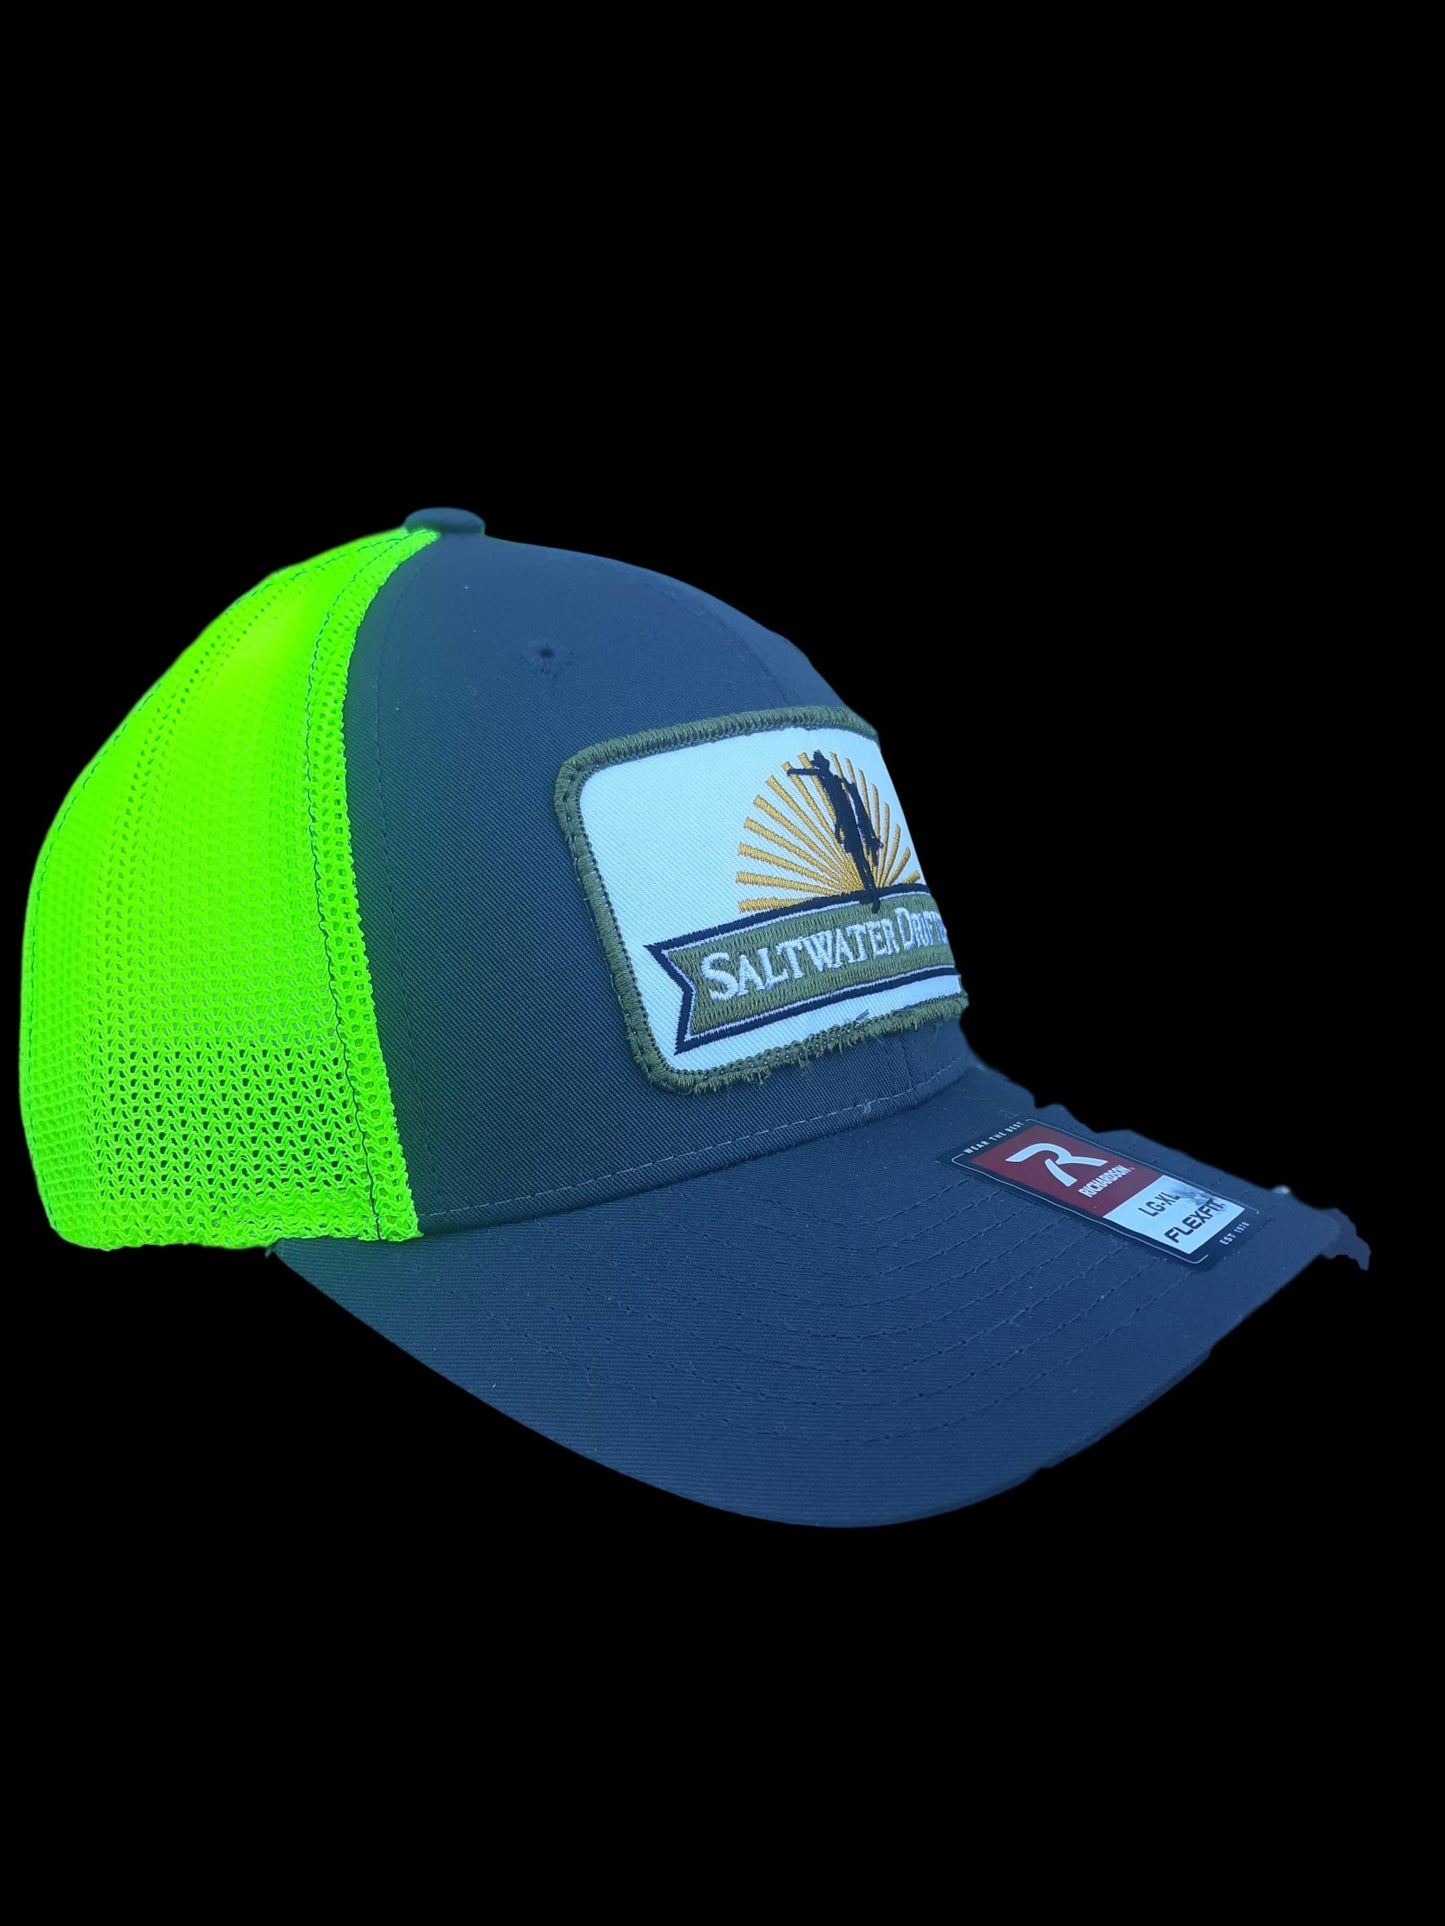 Camo Saltwater Drifter green patch trucker cap. { Free Gaiter with this cap}